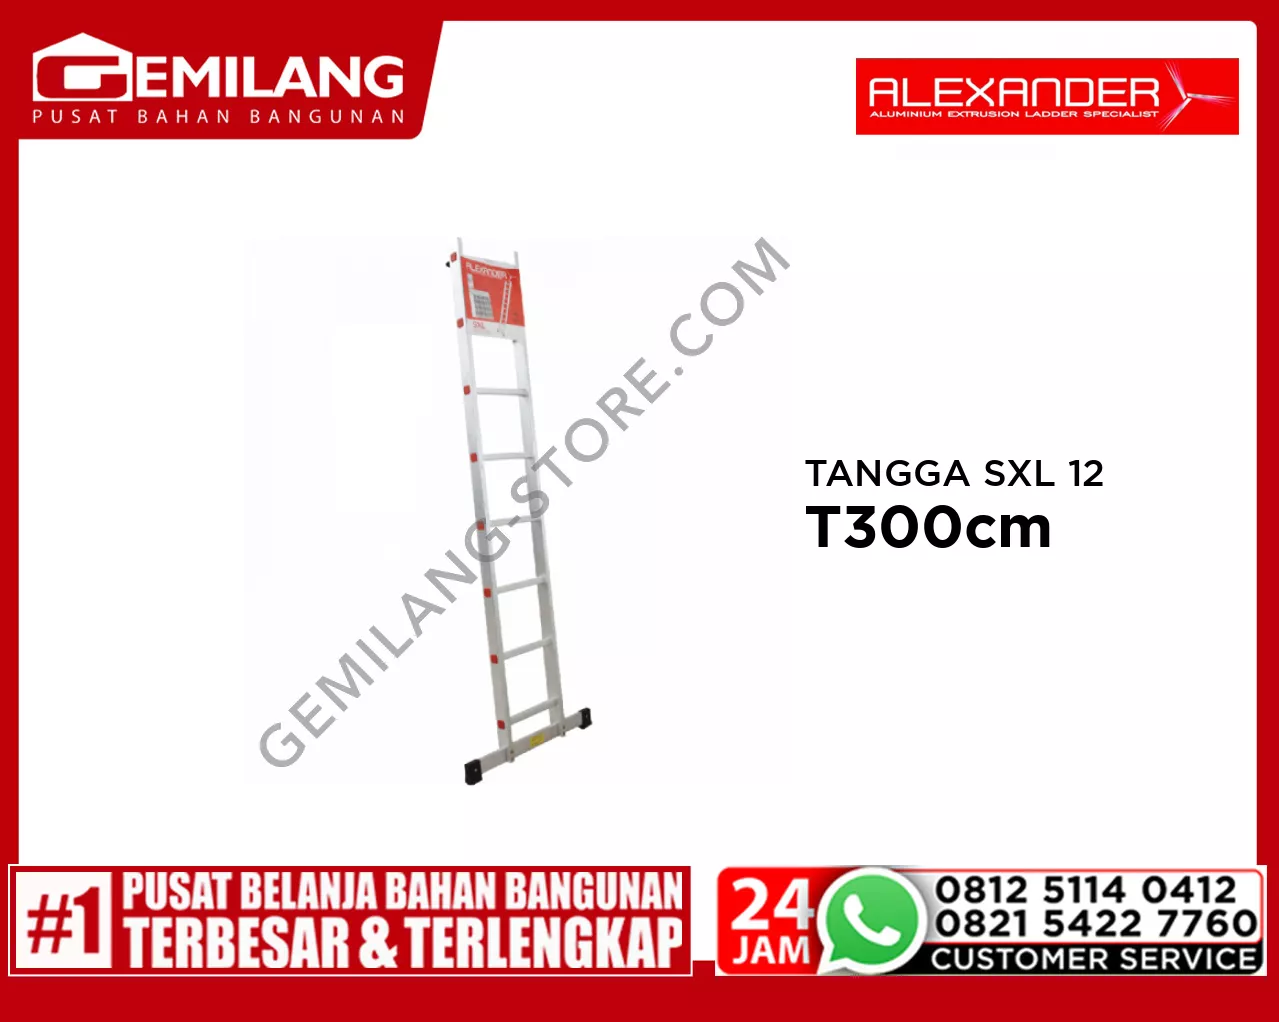 ALEXANDER TANGGA SXL 12 STEPS T300cm